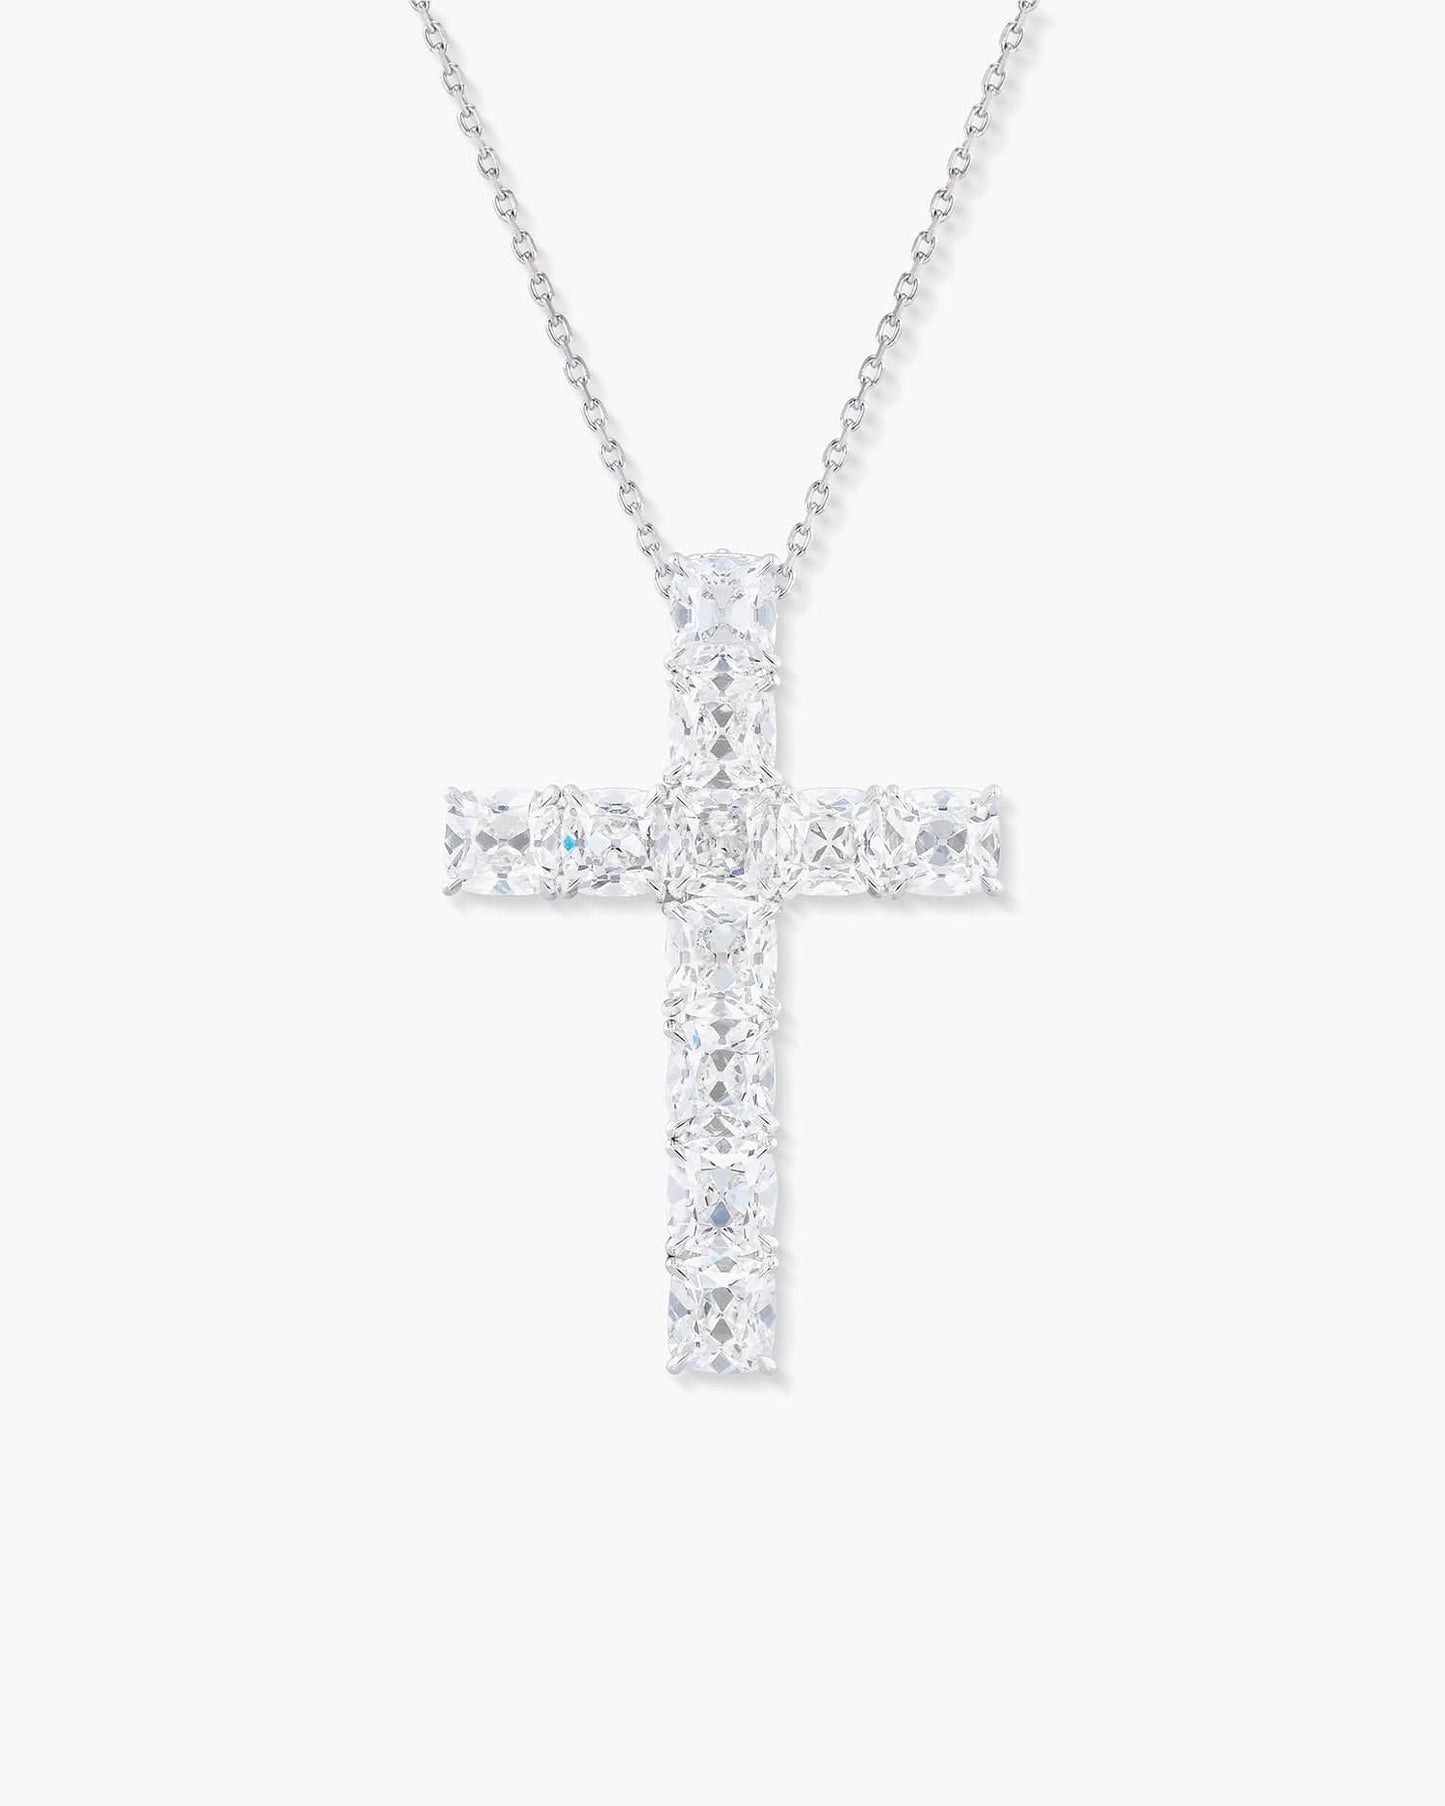 Antique Cushion Cut Diamond Cross Pendant Necklace, 8.11 carats